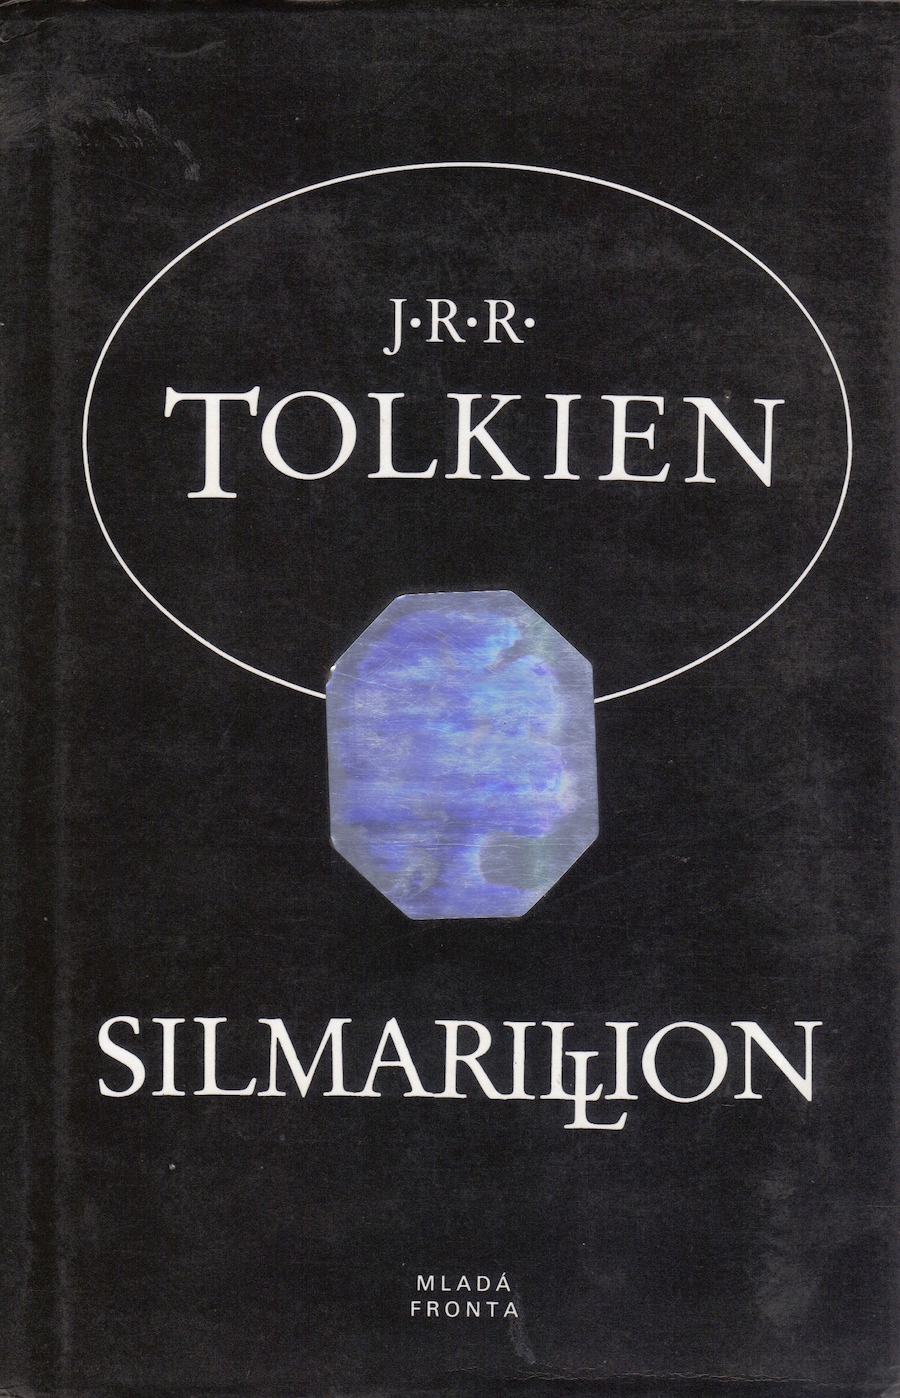 TOLKIEN, J.R.R.. Silmarillion. (Czech). Praha: Mlada fronta, 1992. 319 pp.